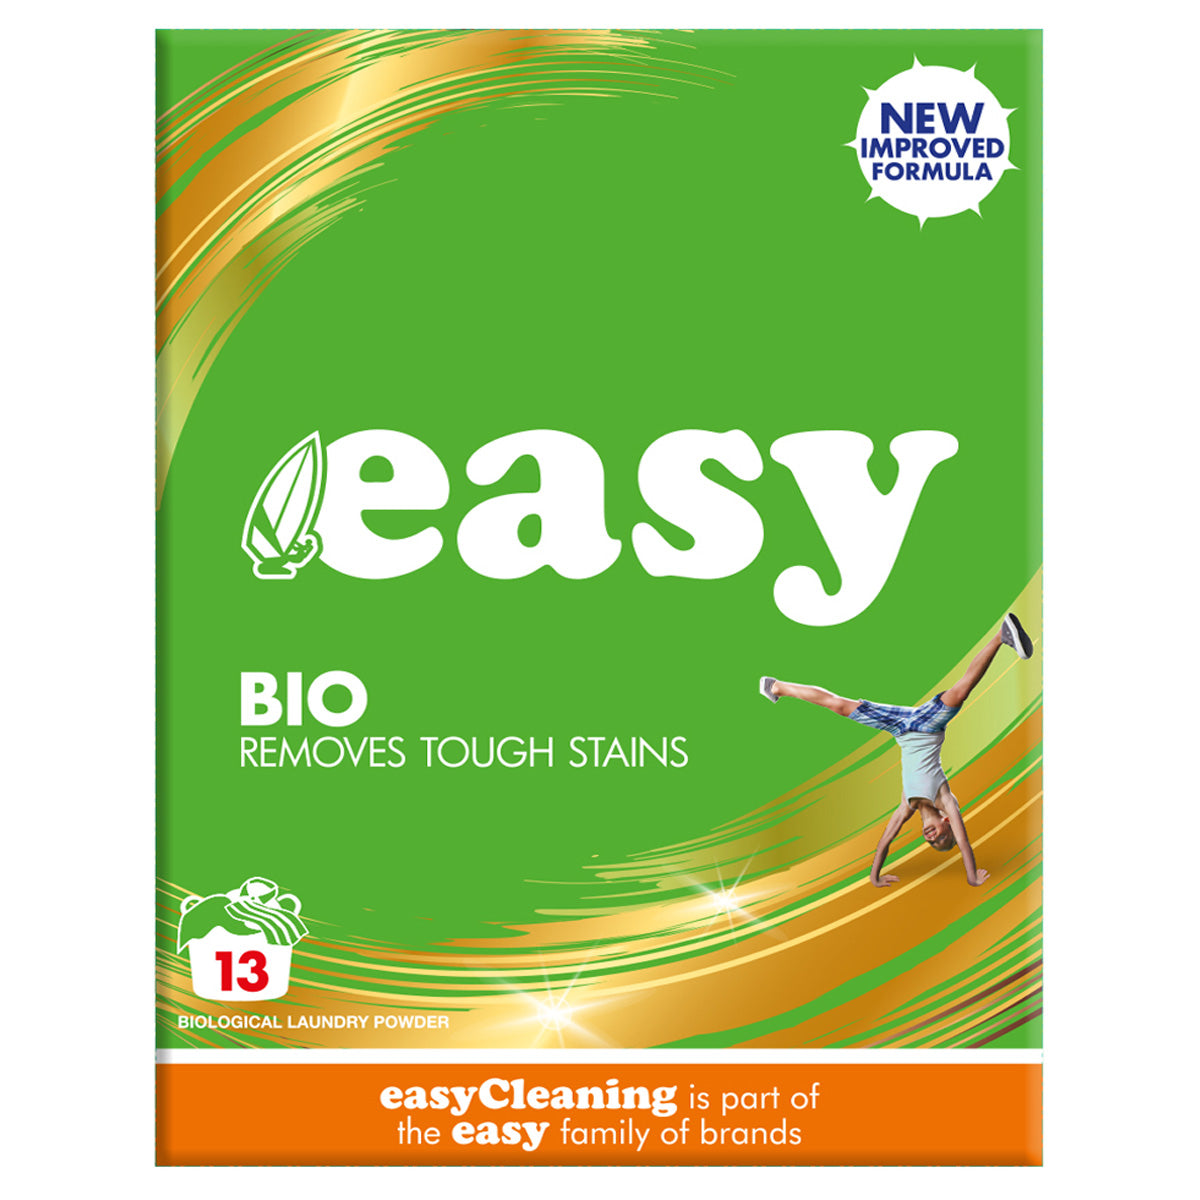 Easy Bio Washing Powder removes tough stains.